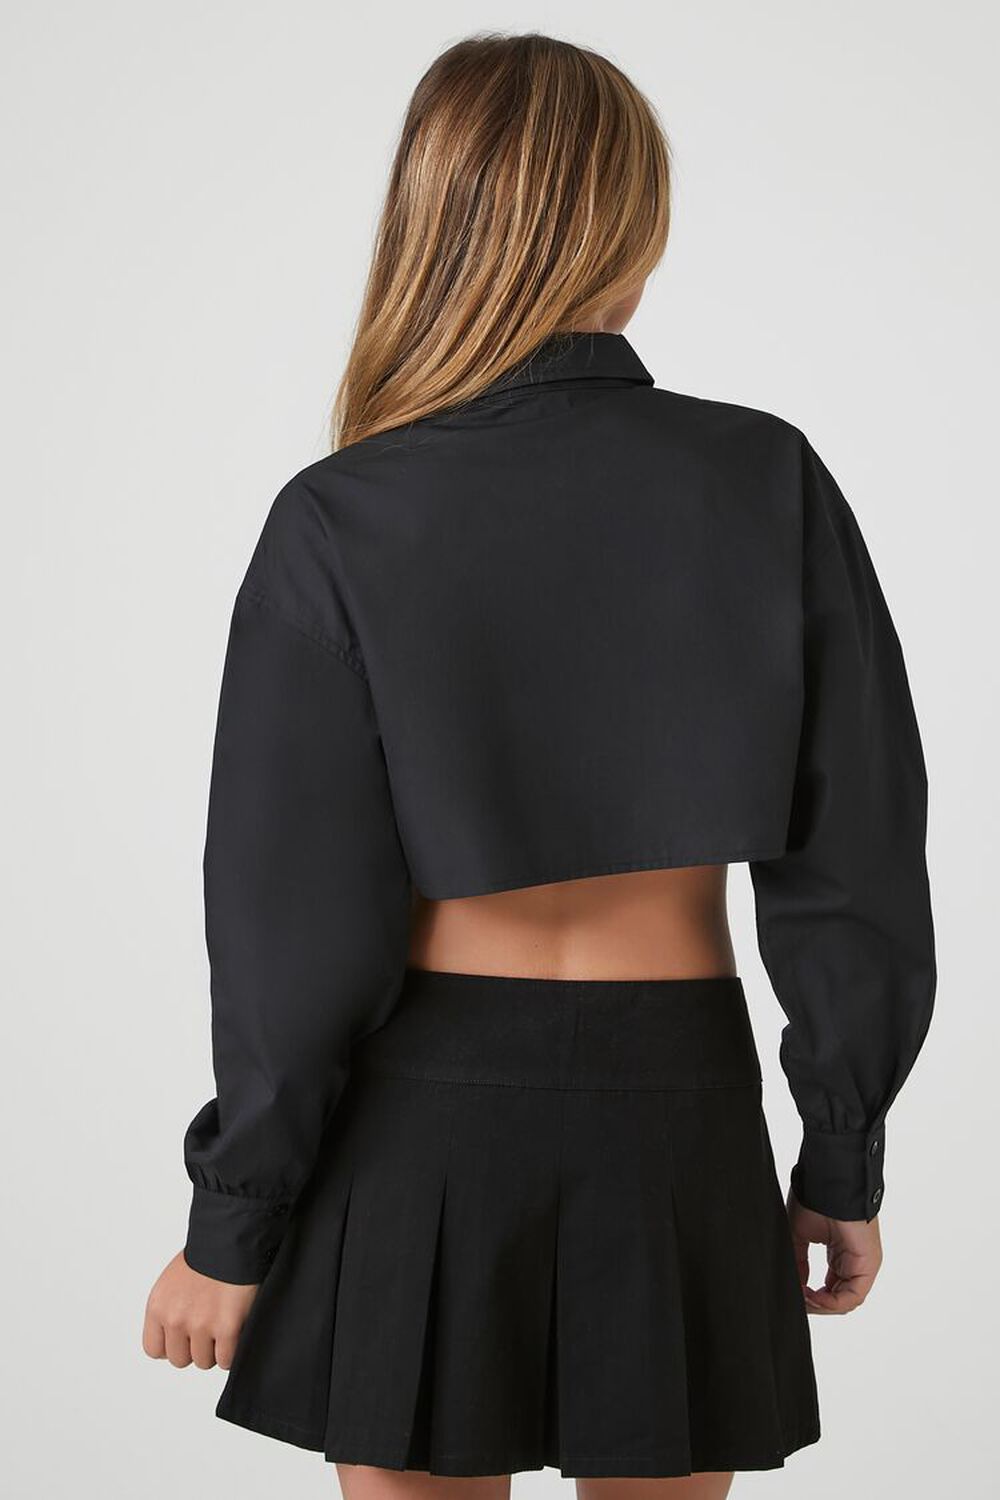 BLACK Cropped Curved-Hem Shirt, image 3